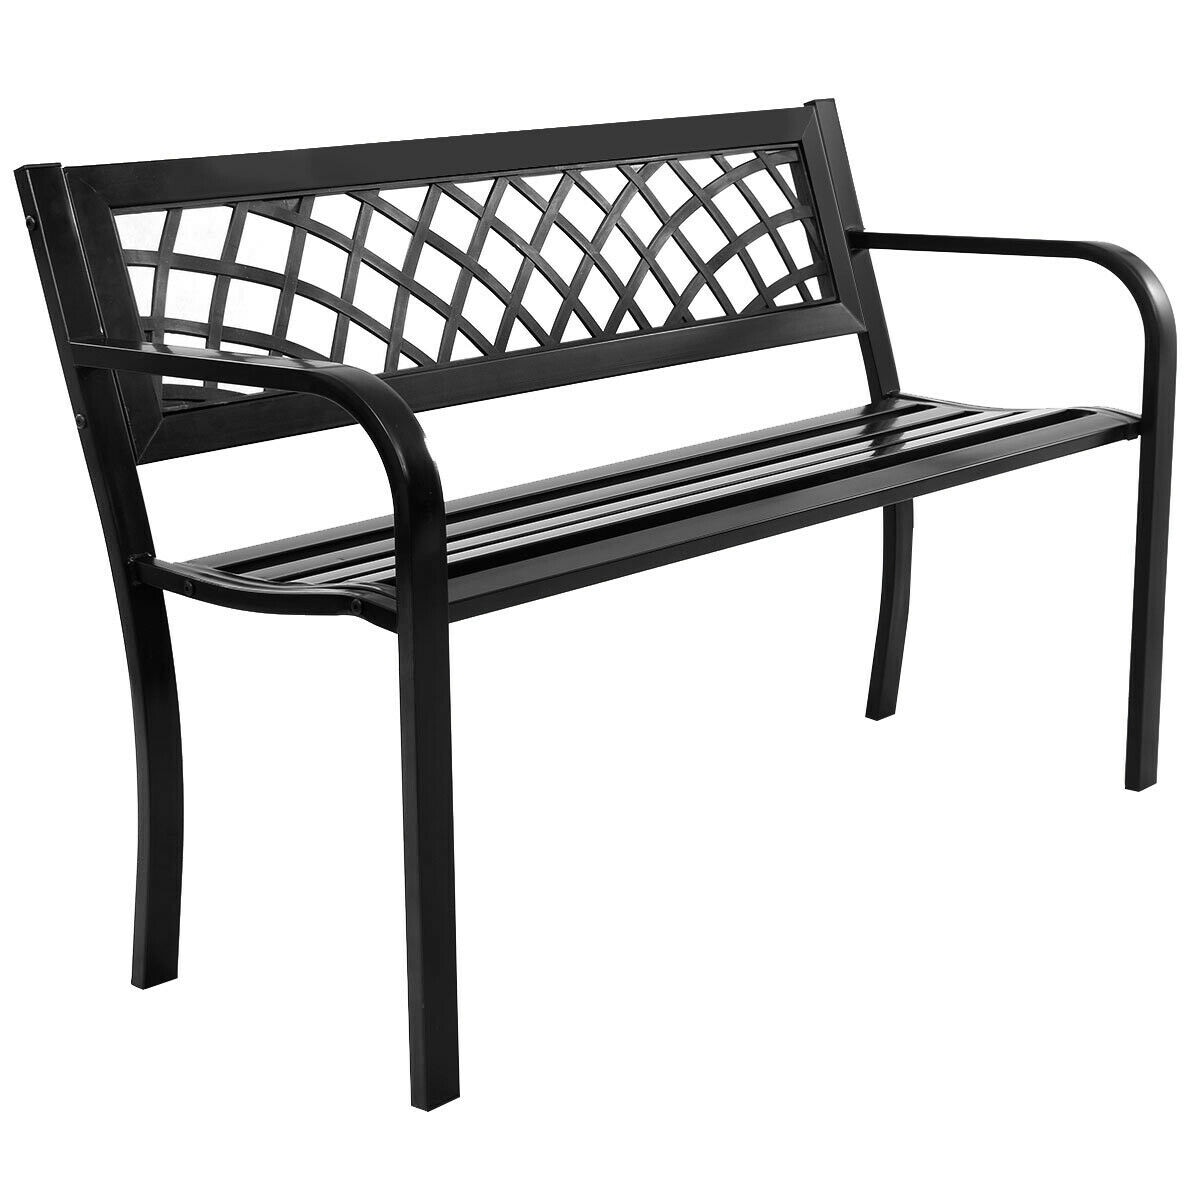 Details about   NEW Patio Park Garden Porch Bench Path Yard Wooden Deck Chair Outdoor Seat 